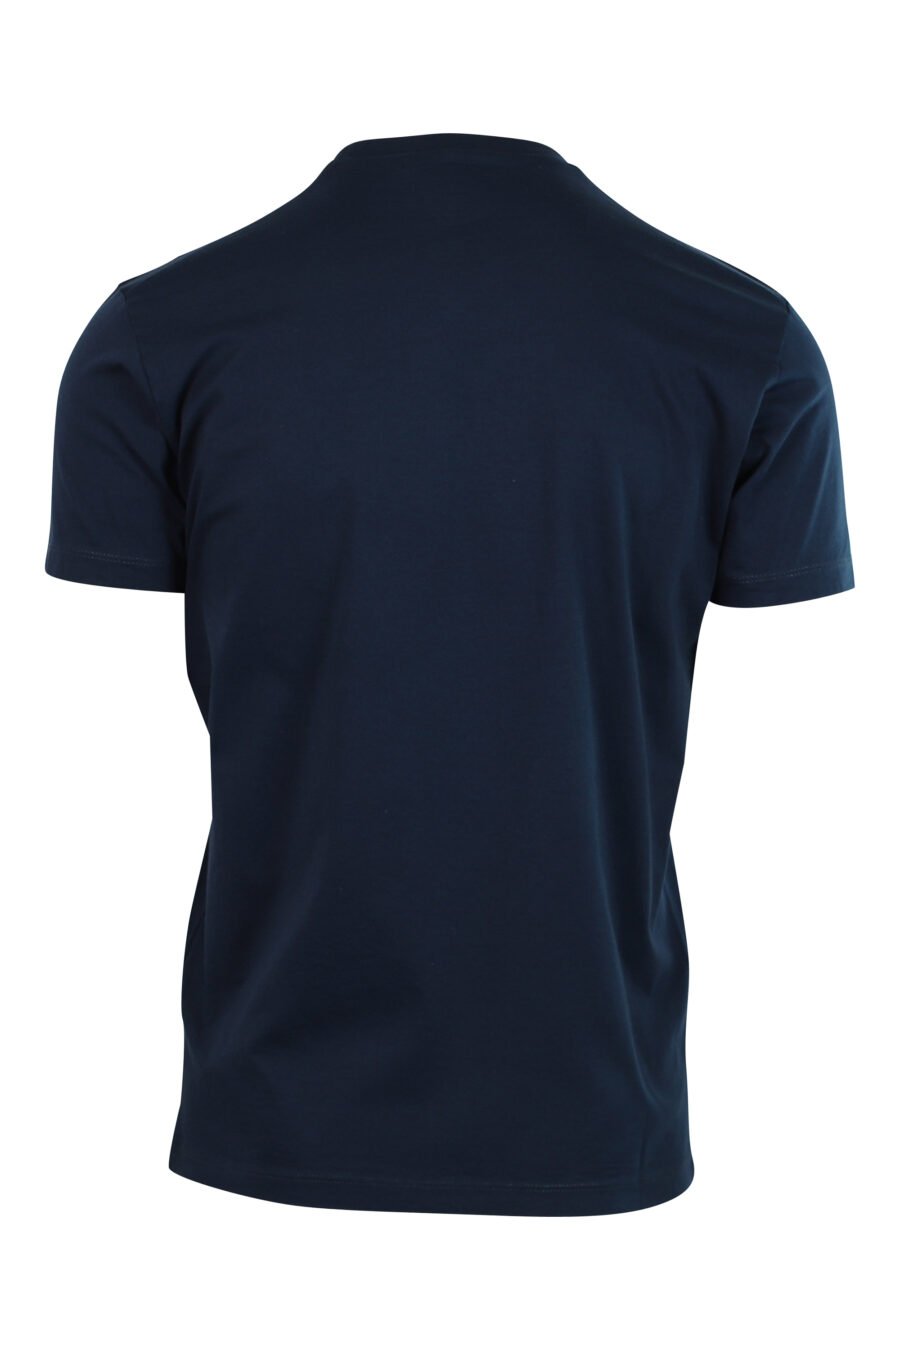 Camiseta azul oscuro con minilogo rojo en gráfico hoja delineada - 8054148046569 2